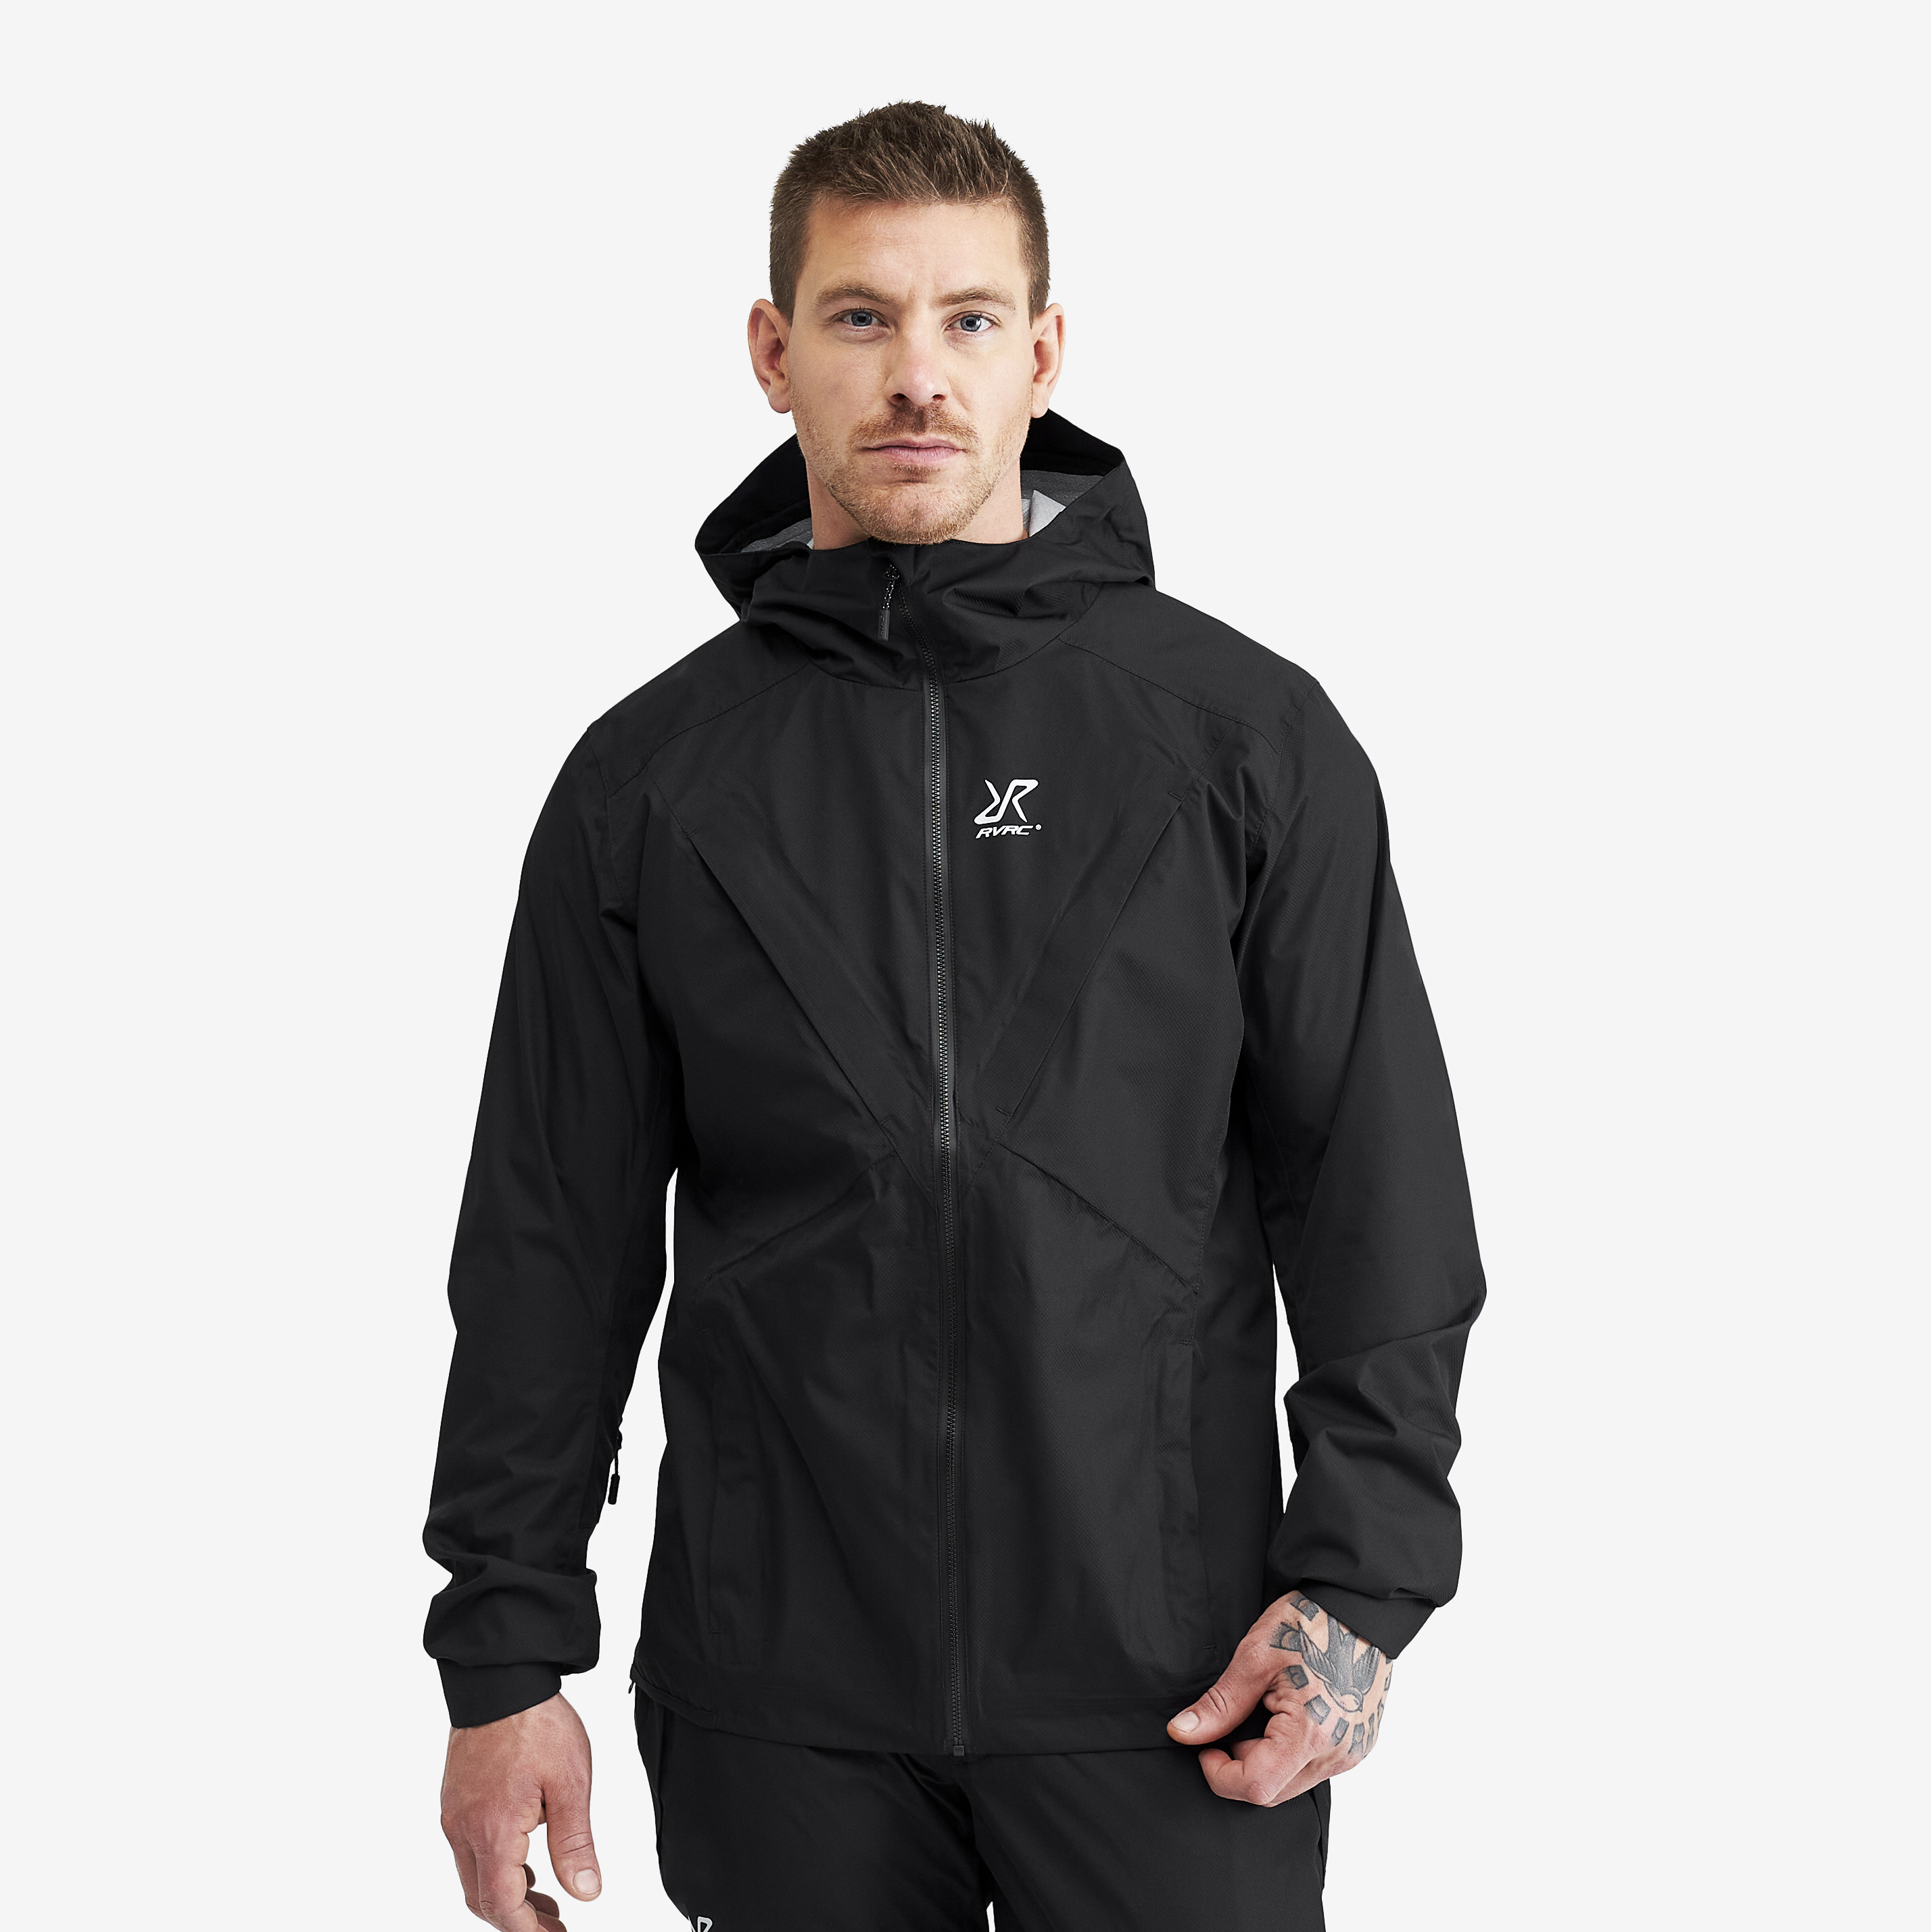 Typhoon waterproof jacket for men in black